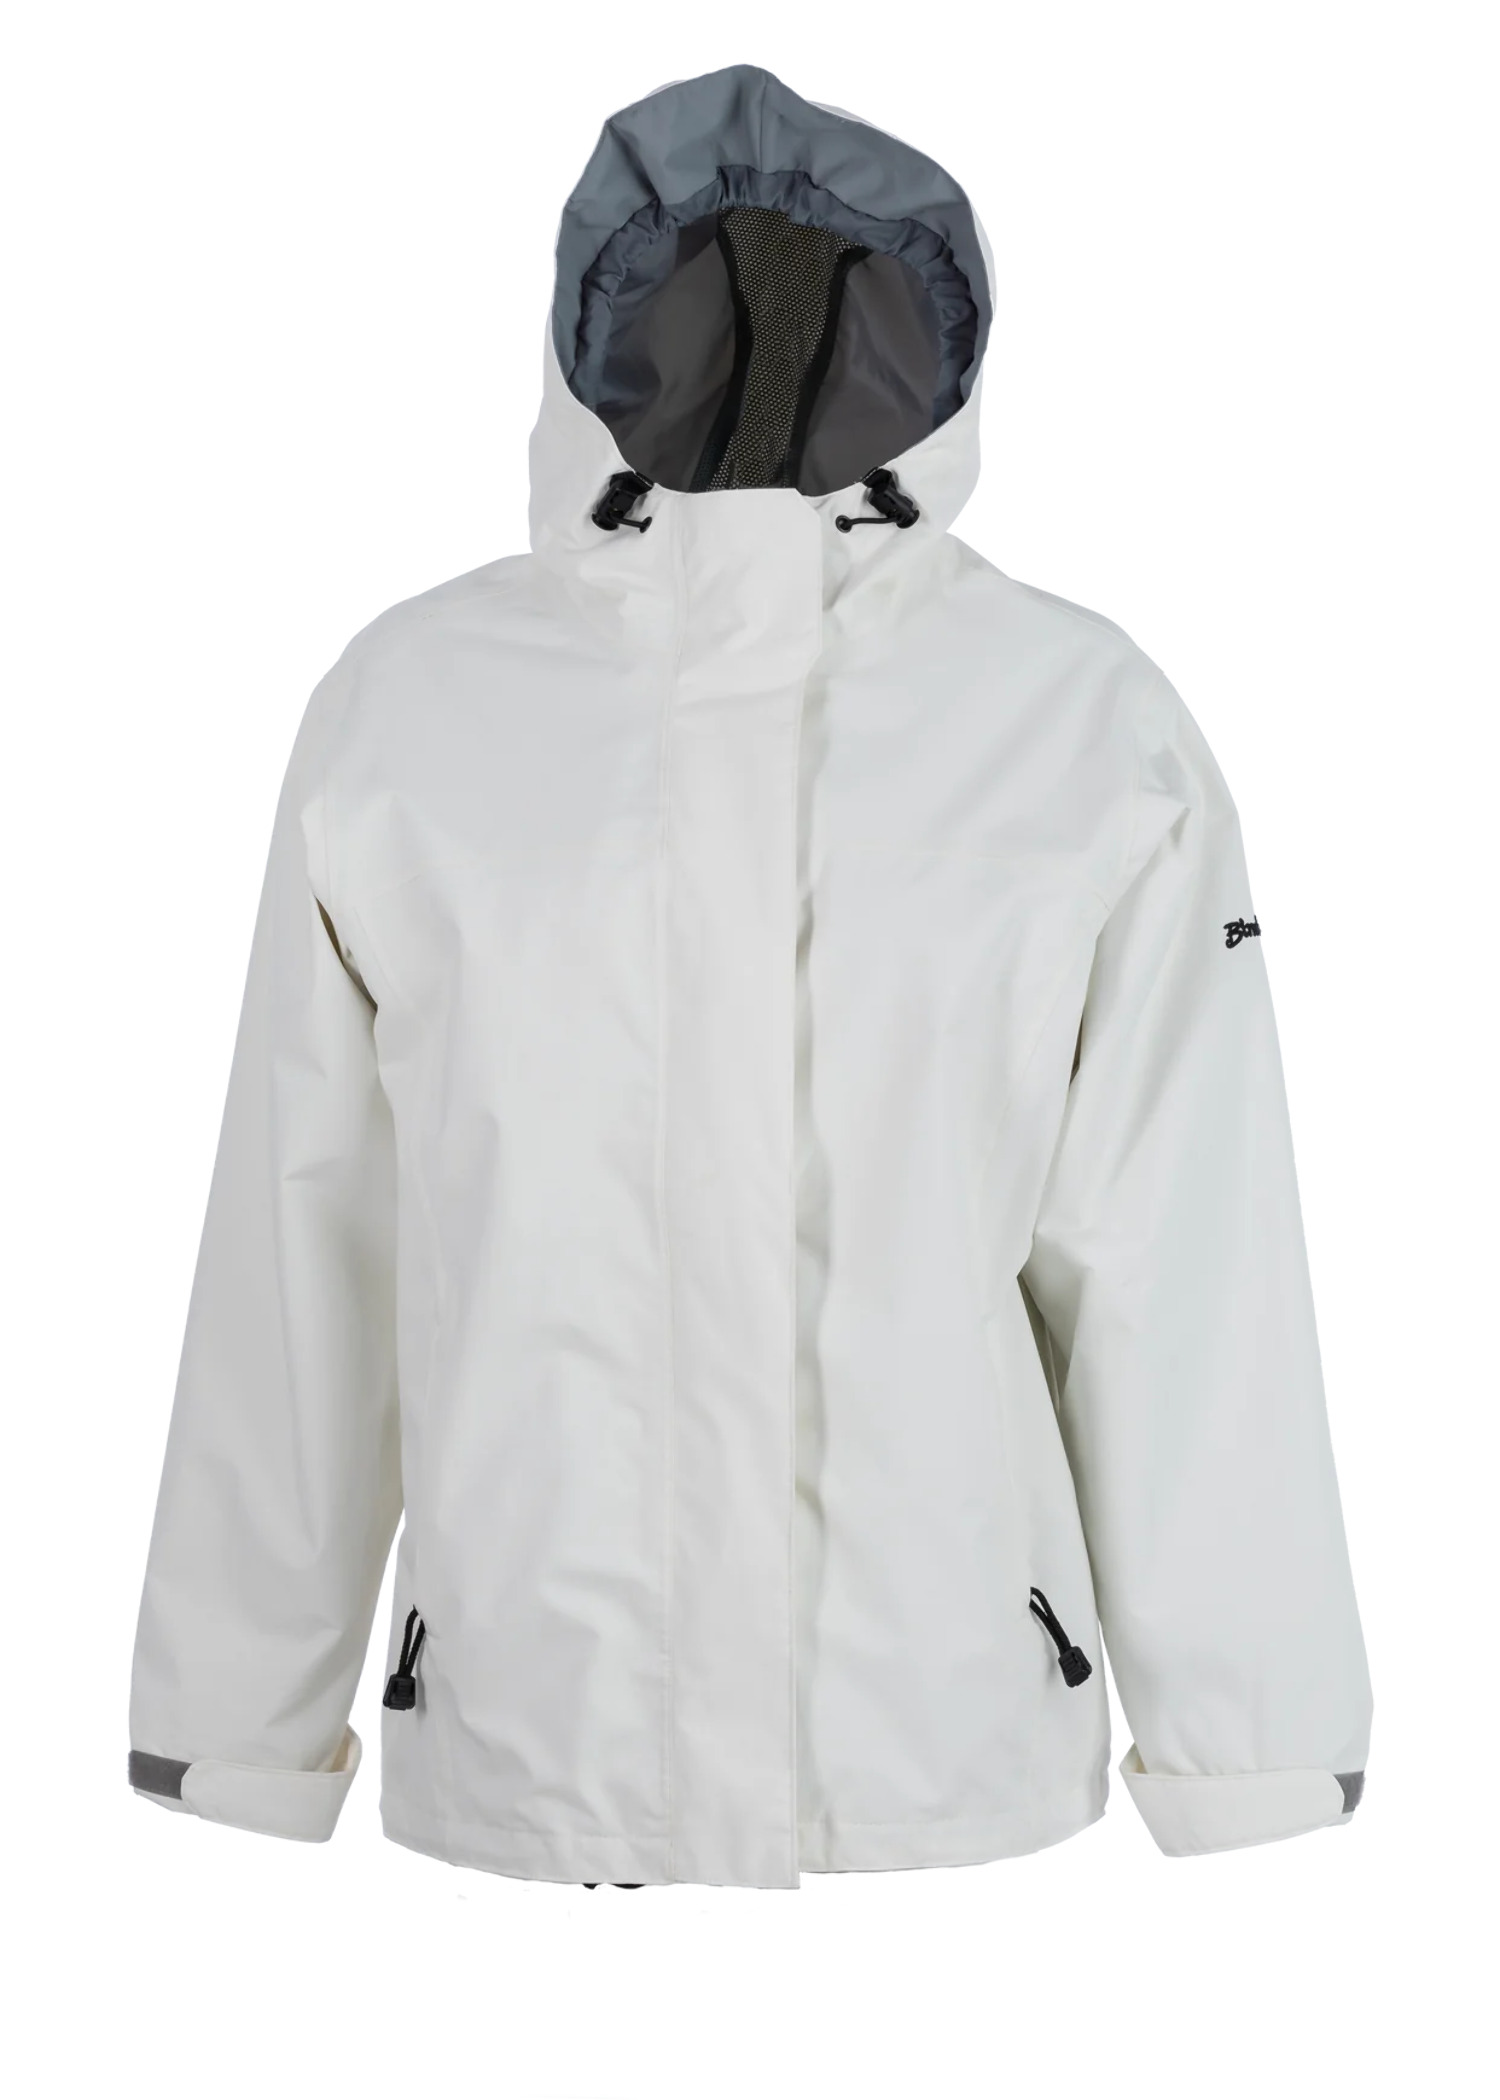 Bimini Bay Outfitters Boca Grande Women's Waterproof Breathable Jacket - image 1 of 6